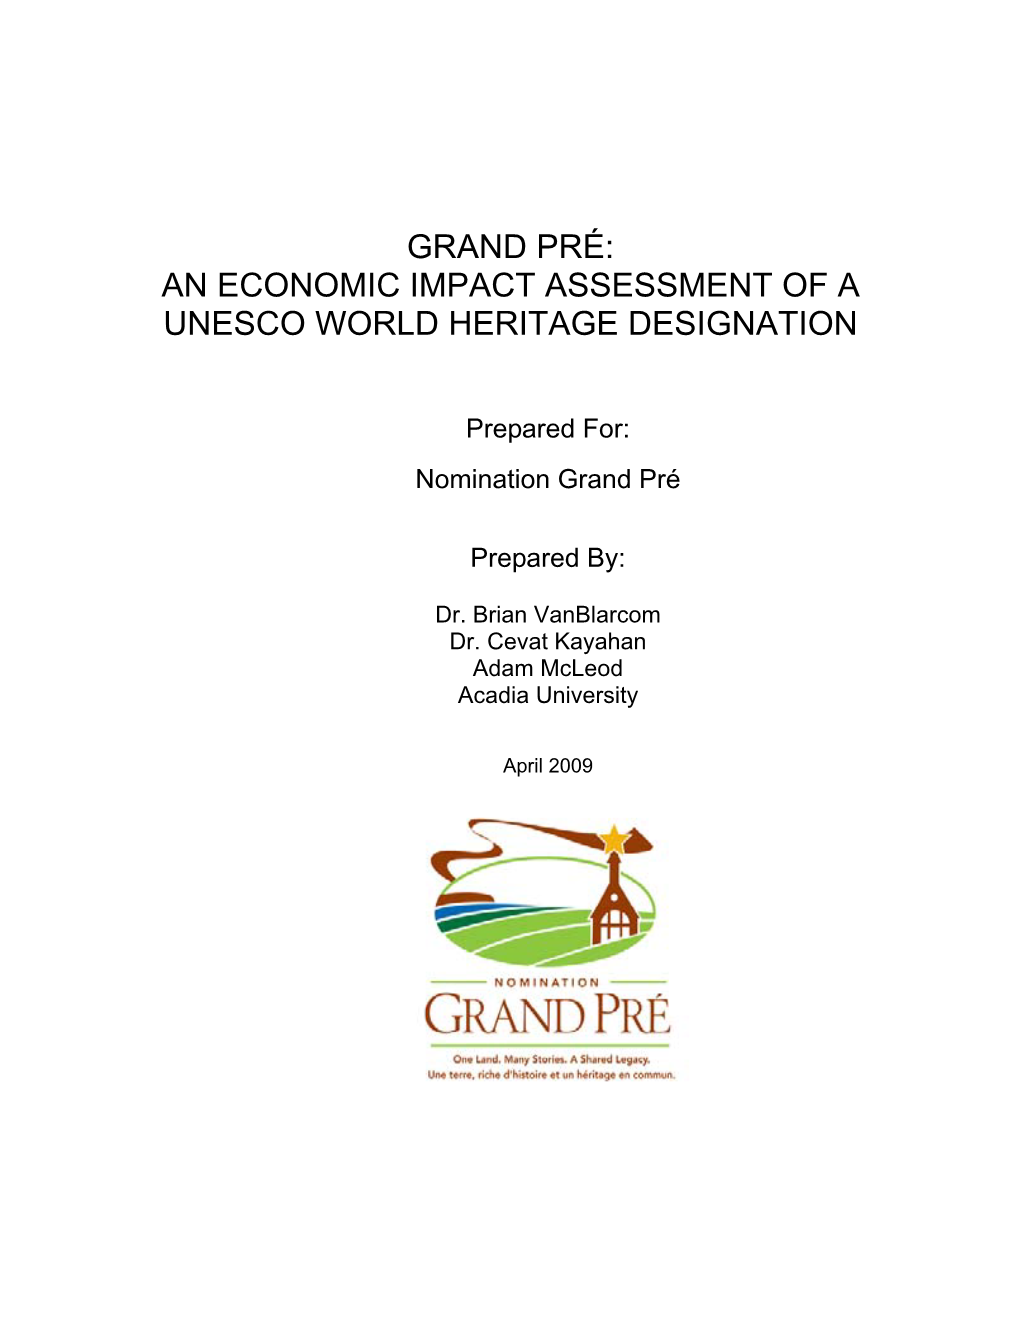 An Economic Impact Assessment of a Unesco World Heritage Designation